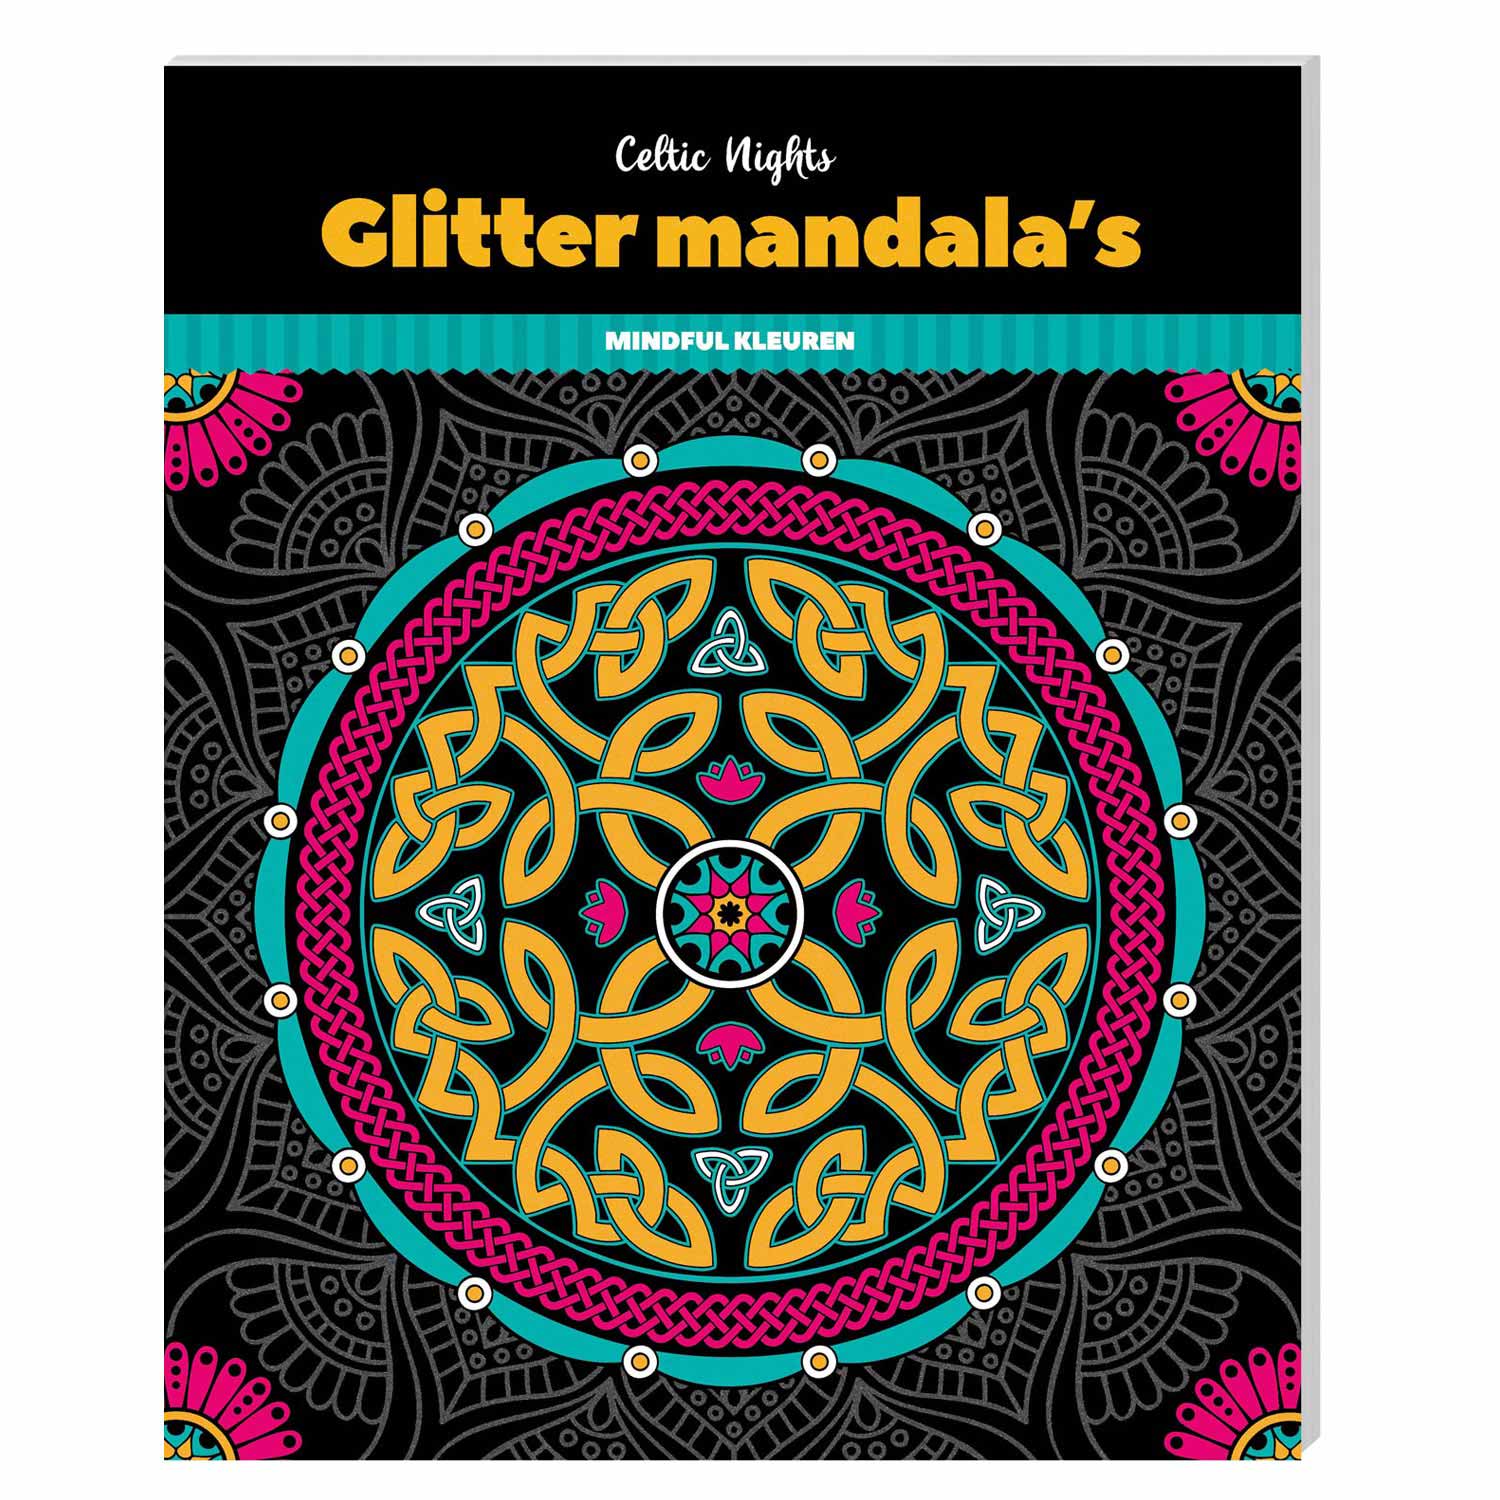 Glitter Mandala's - Celtic Nights